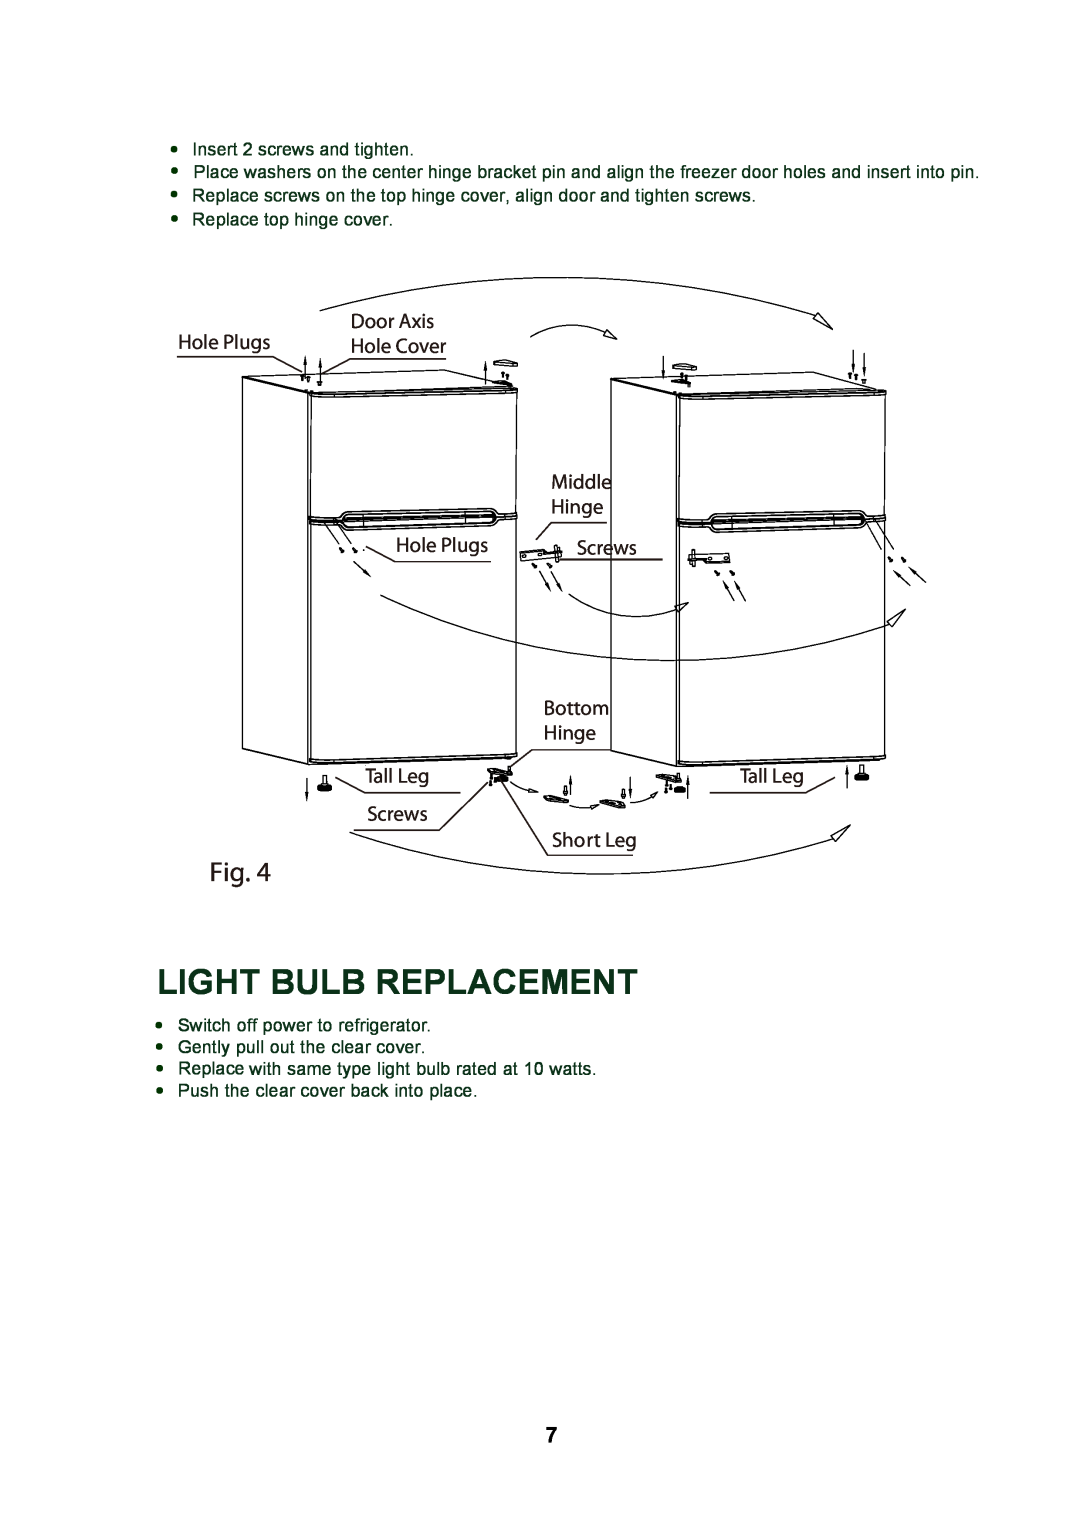 Oster OSDR325B1 Light Bulb Replacement, Hole Plugs, Door Axis, Middle Hinge, Bottom Hinge, Tall Leg, Screws Short Leg 